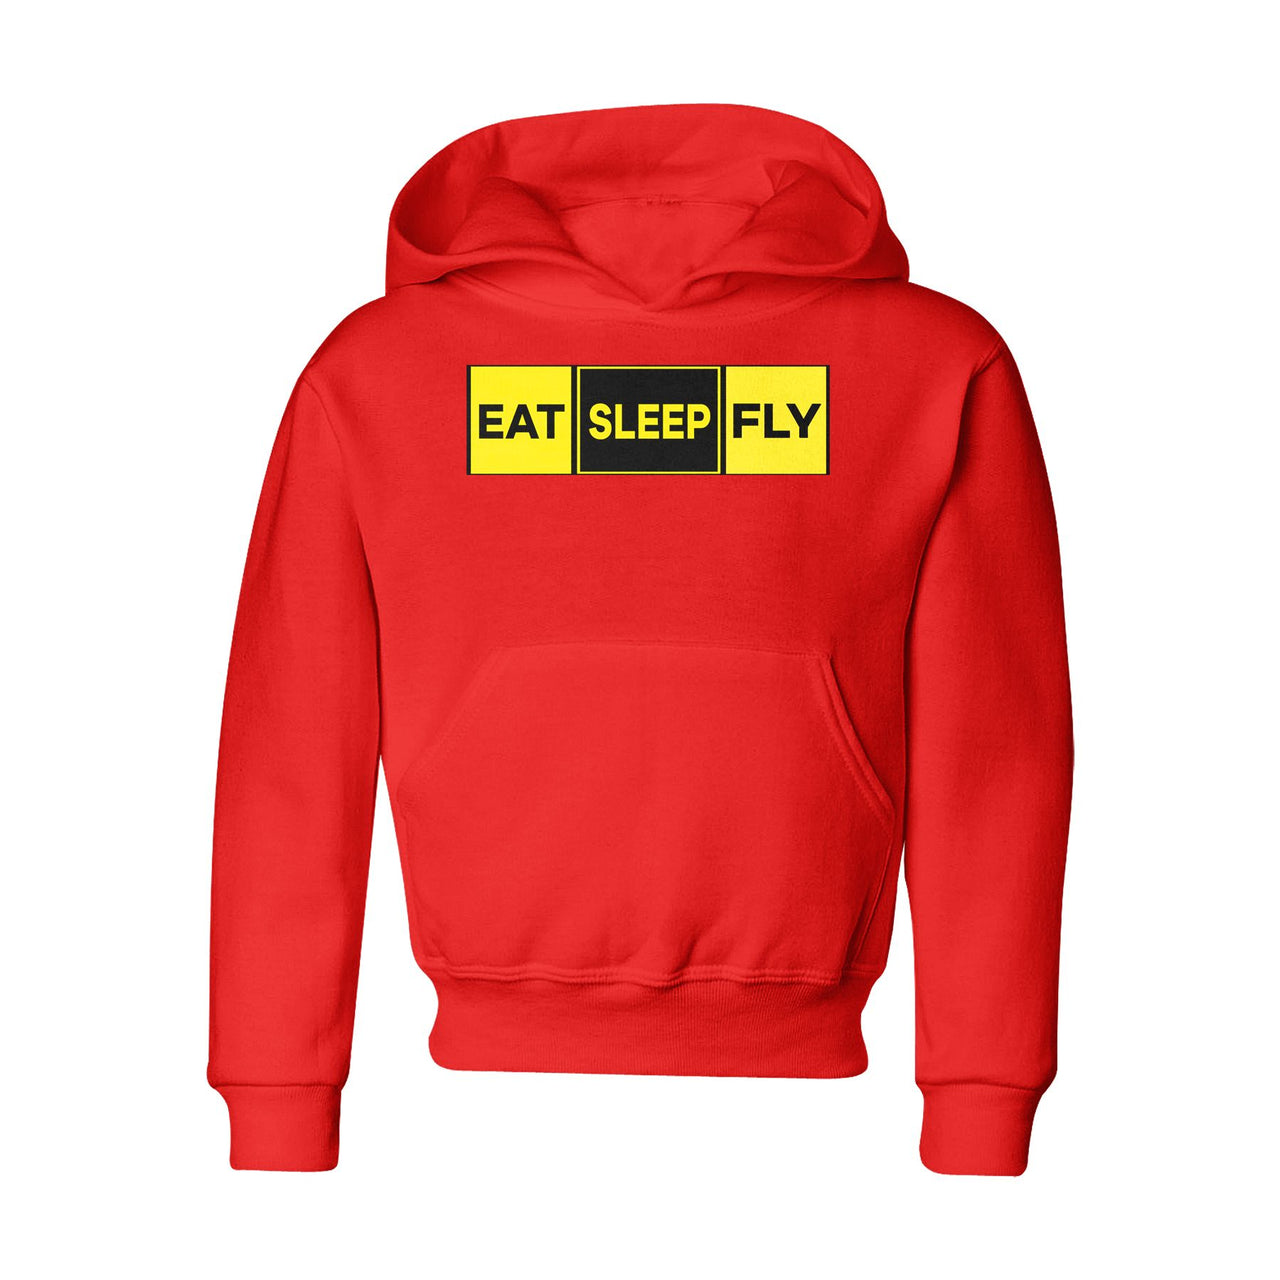 Eat Sleep Fly (Colourful) Designed "CHILDREN" Hoodies